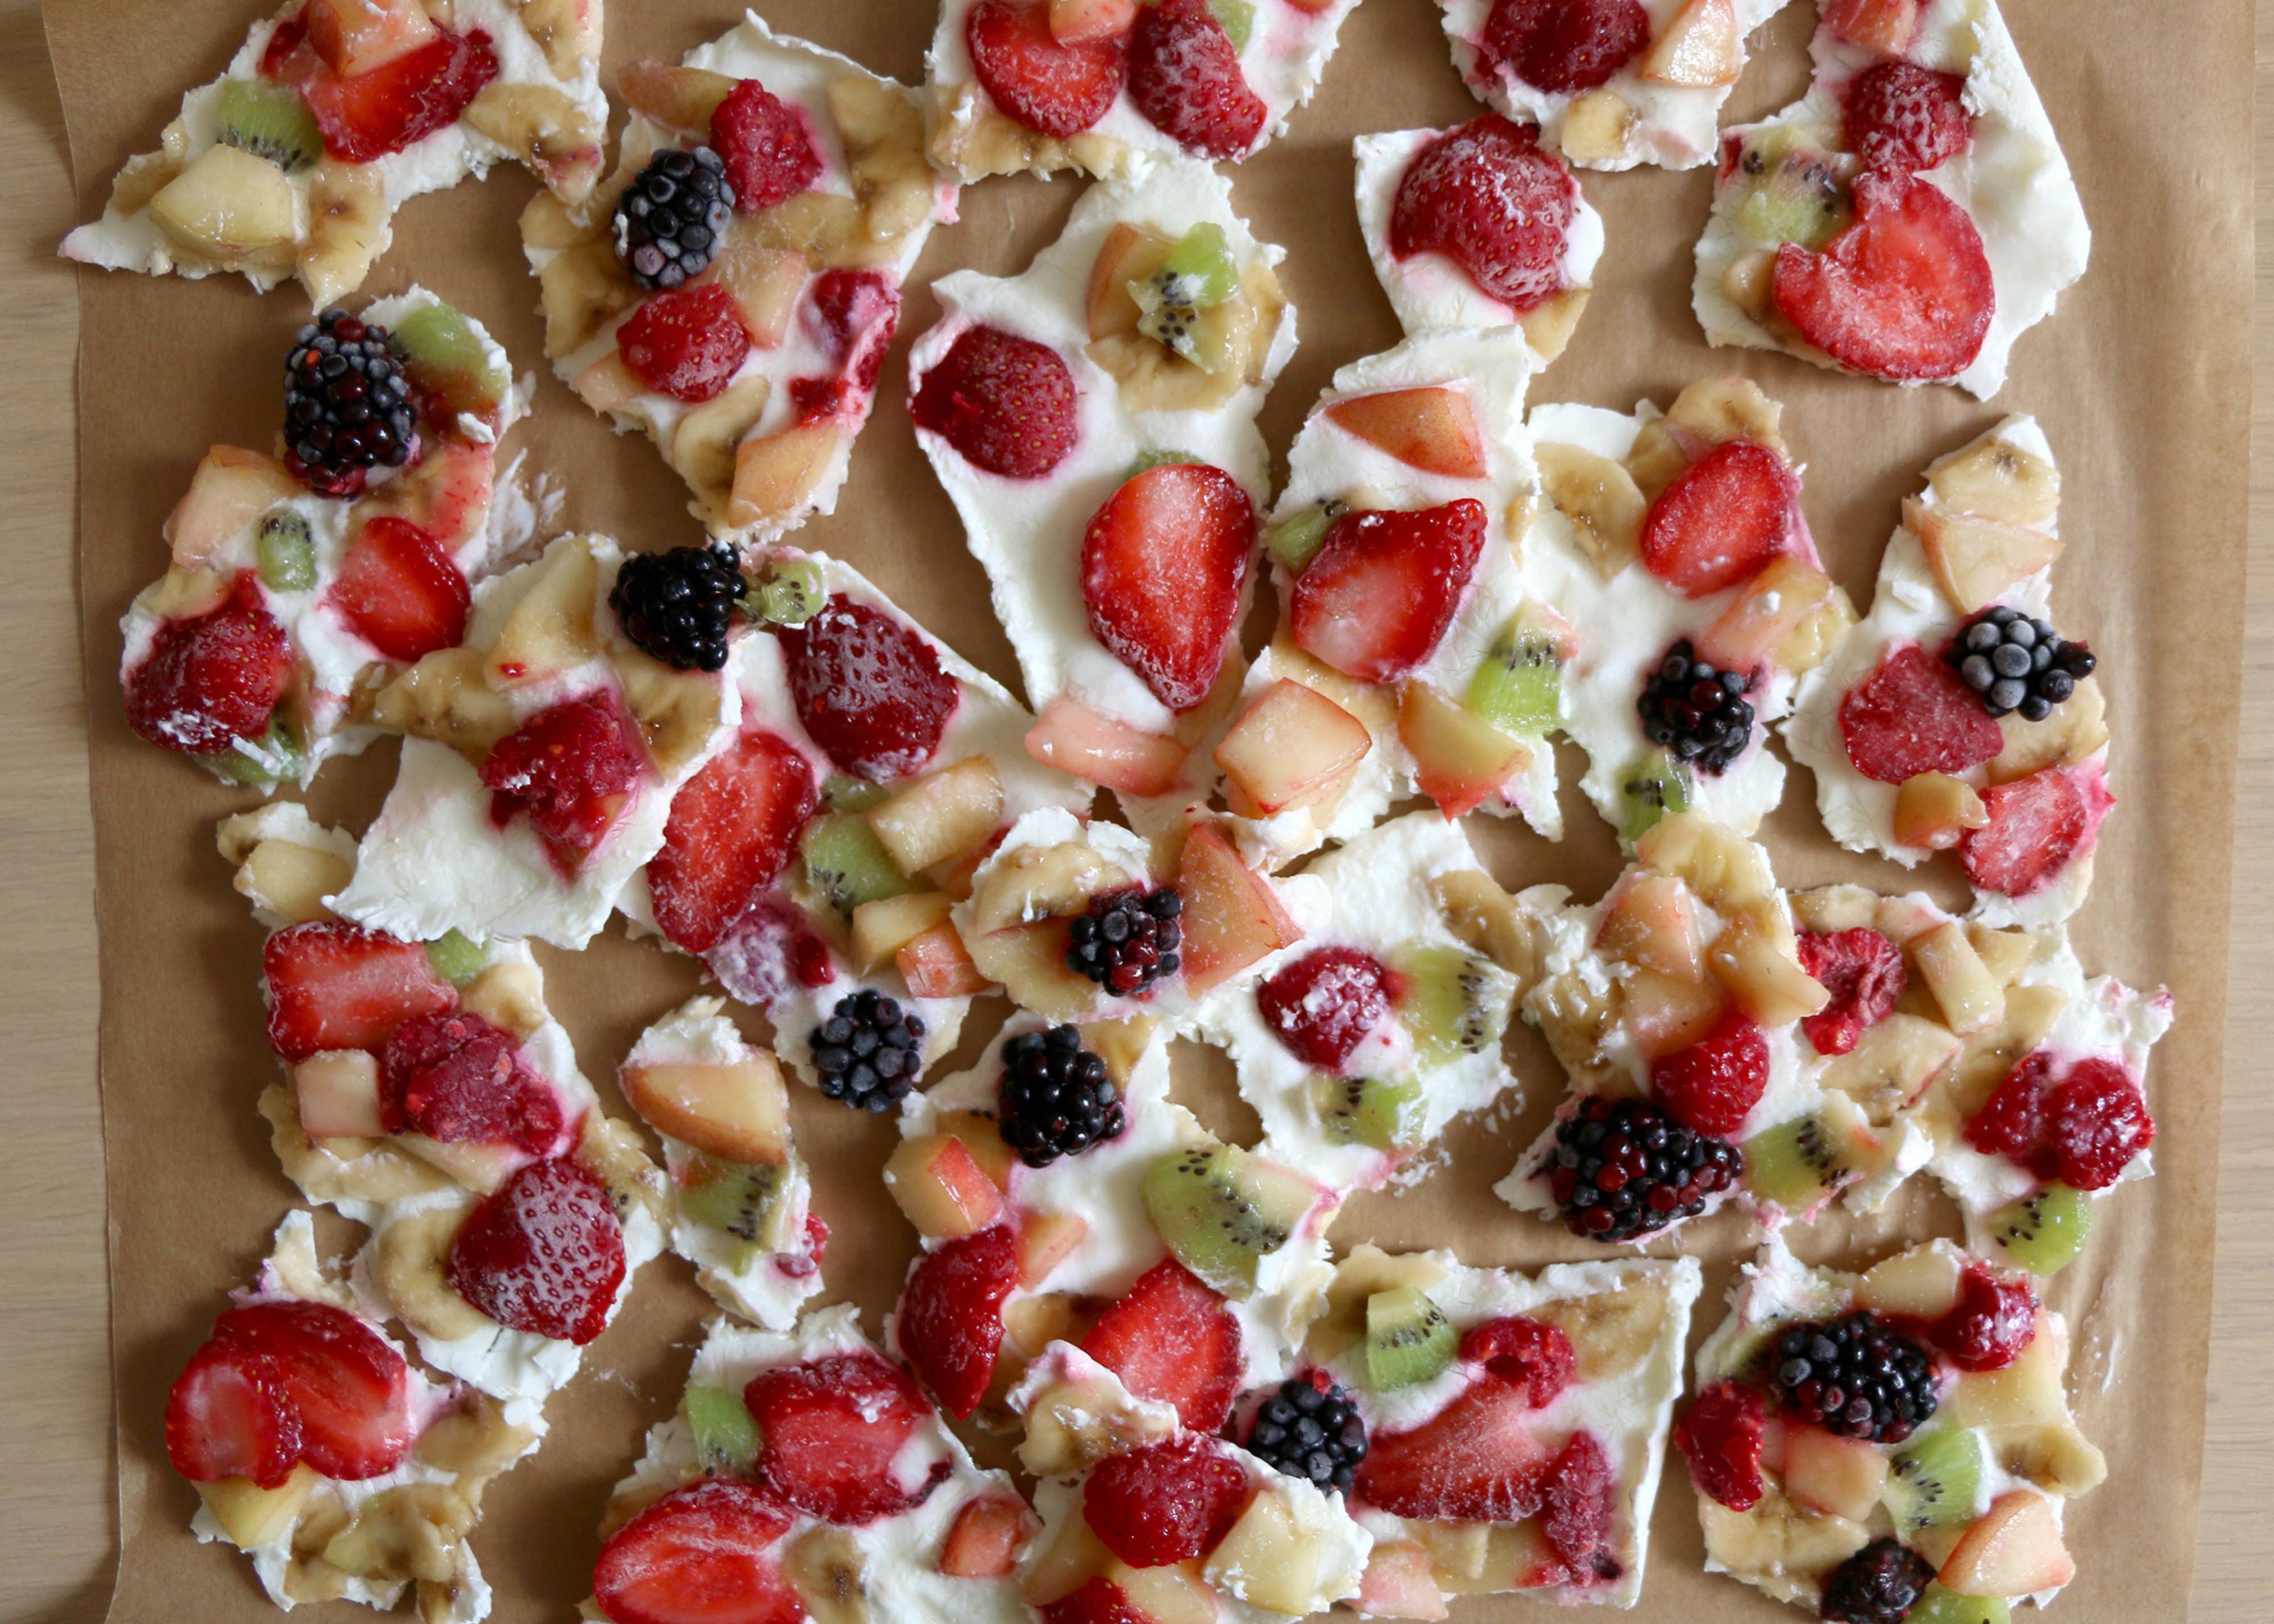 Frozen yogurt bark topped with assorted berries